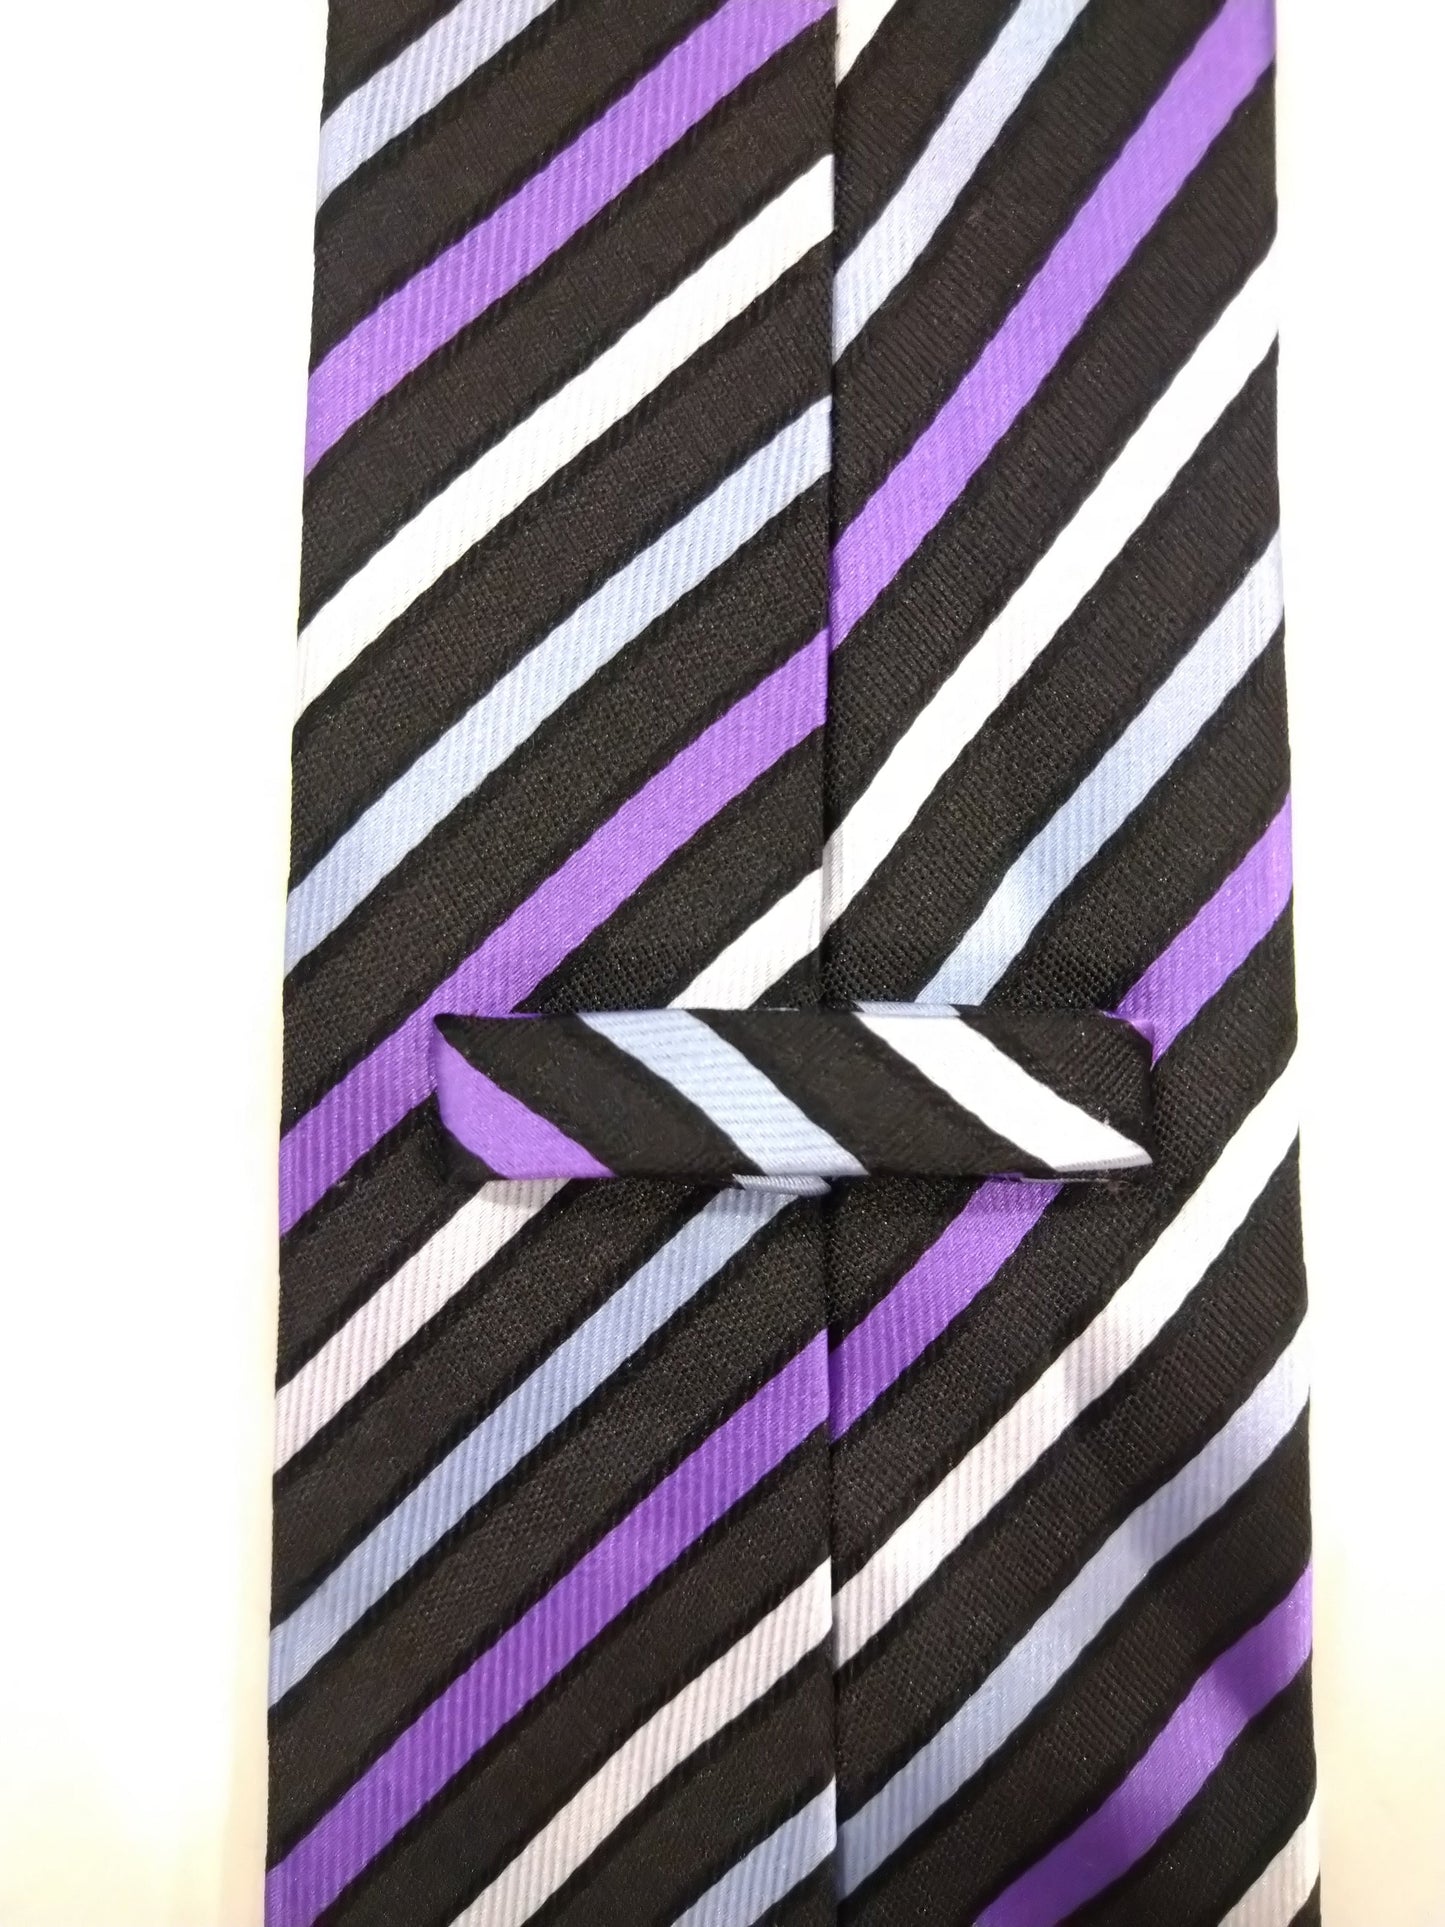 Polyester gestreepte stropdas. Paars wit zwart gestreept.